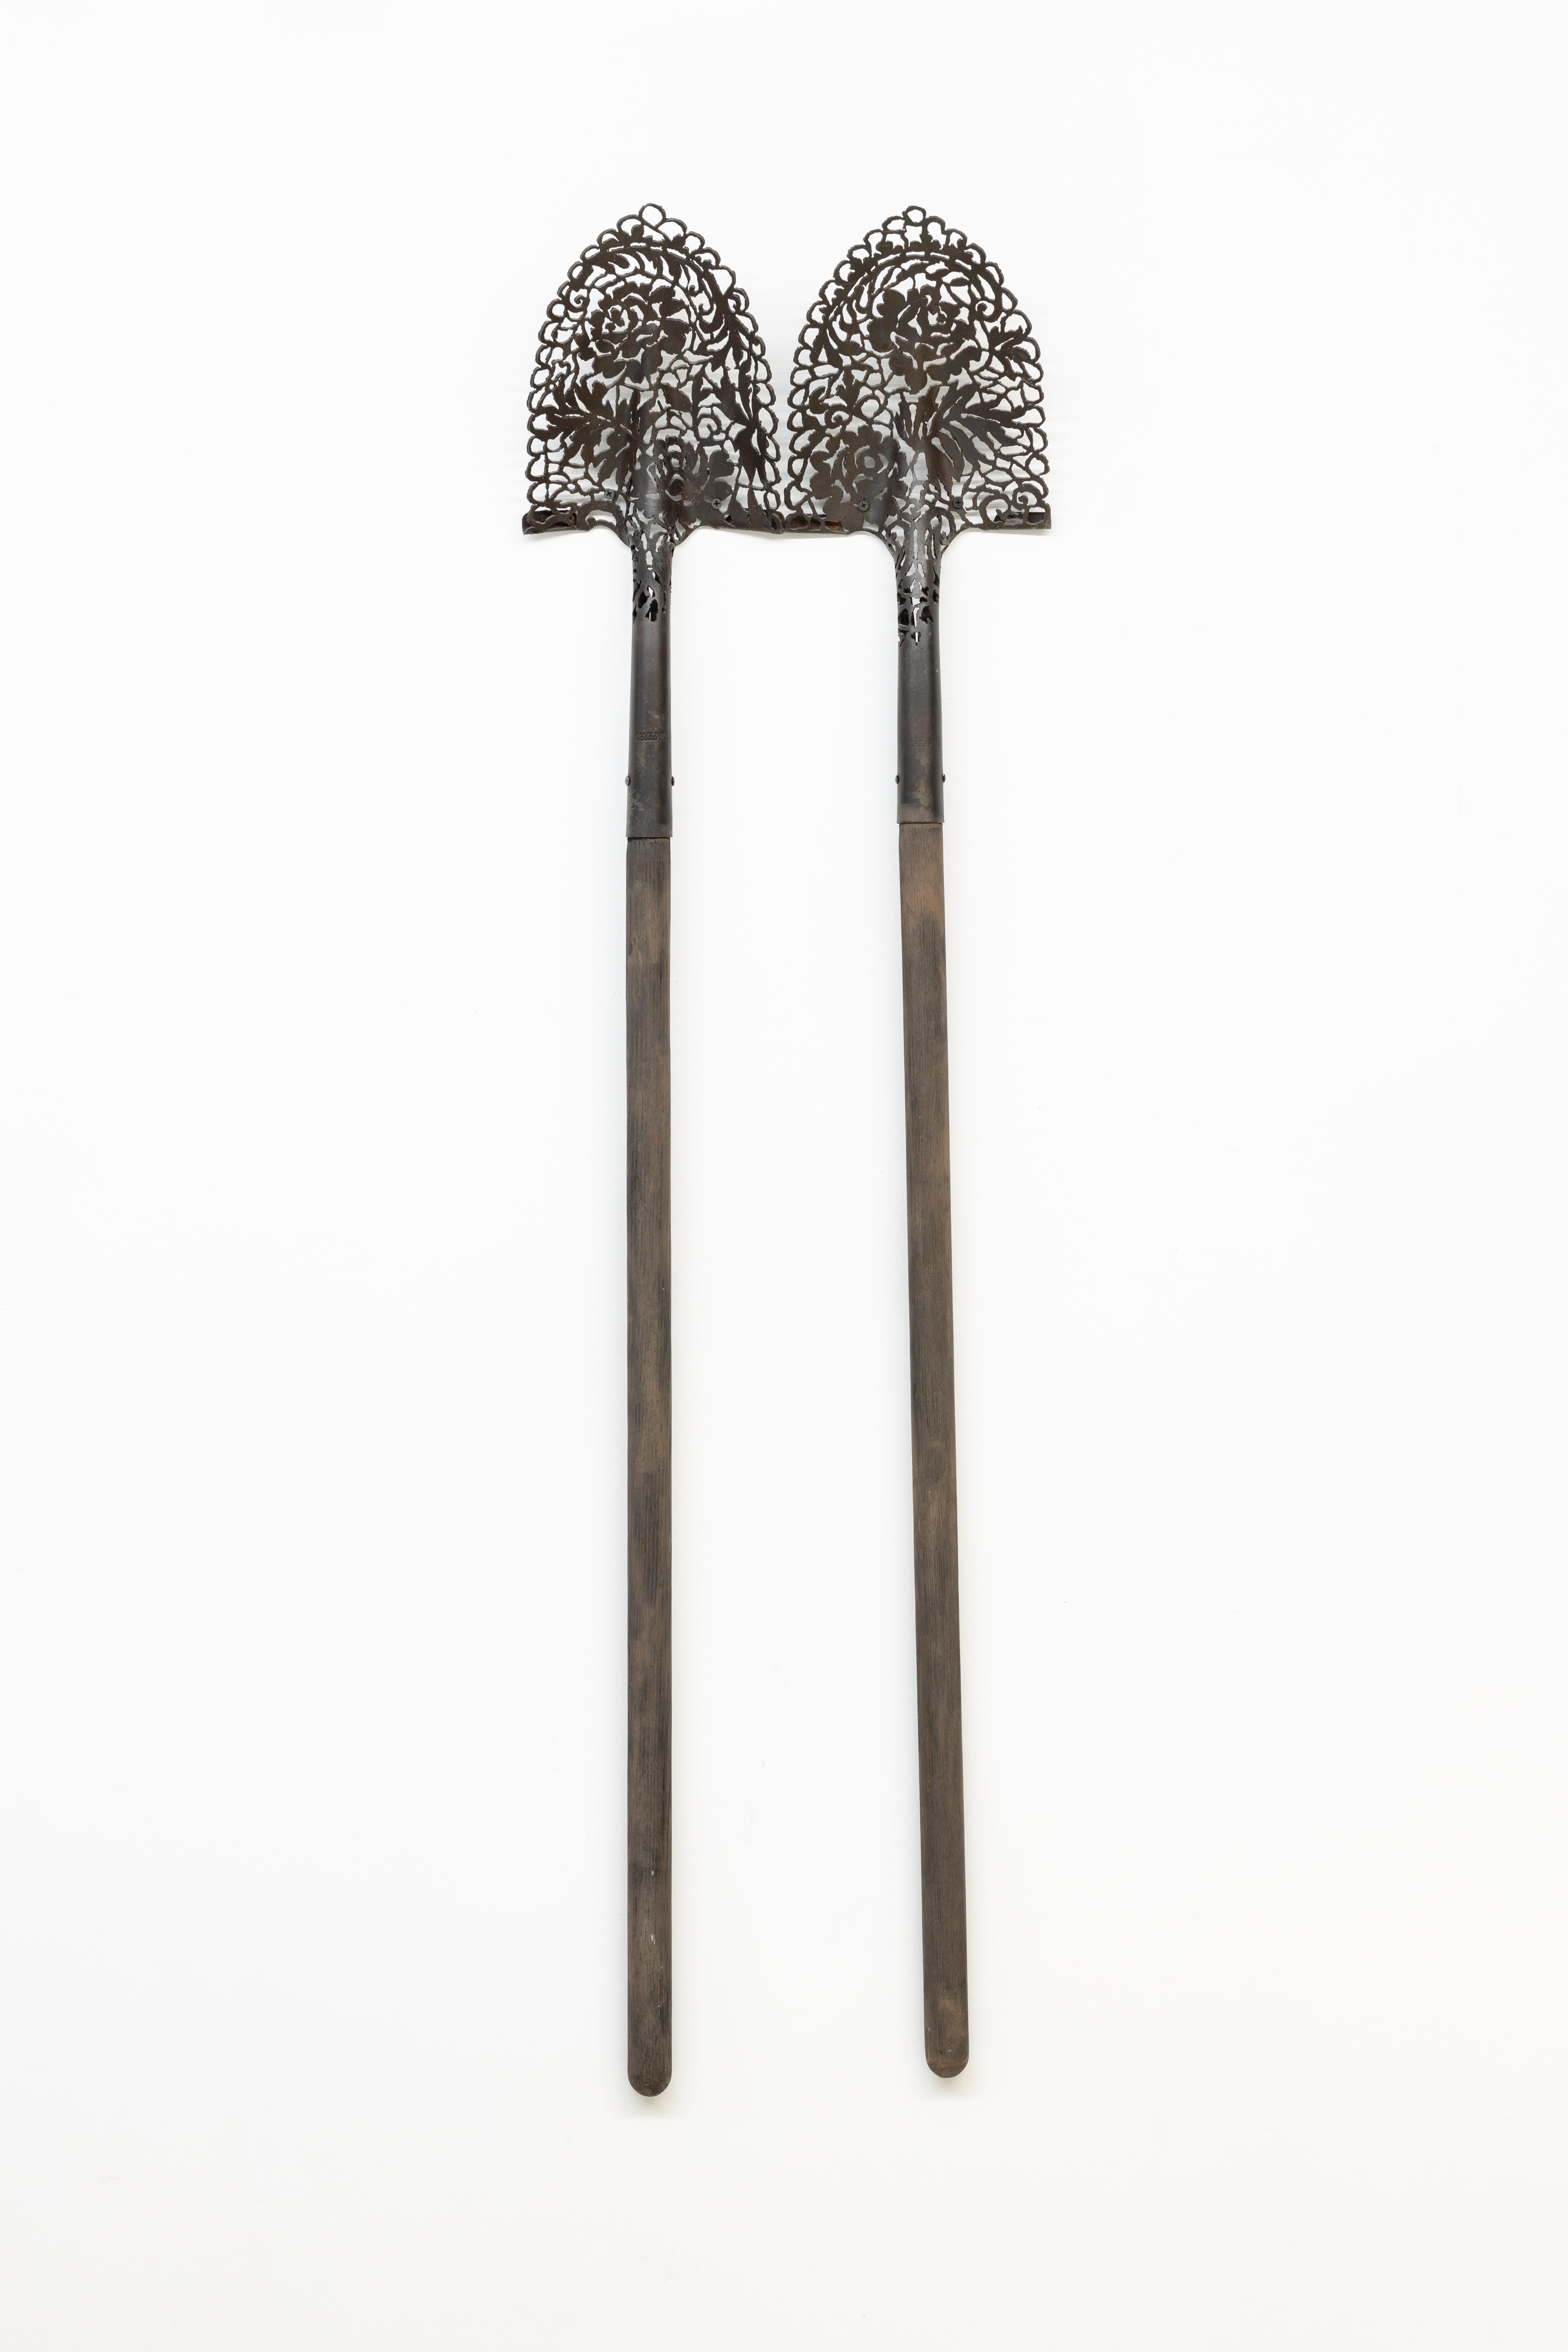 Untitled (shovels) - Sculpture by Cal Lane